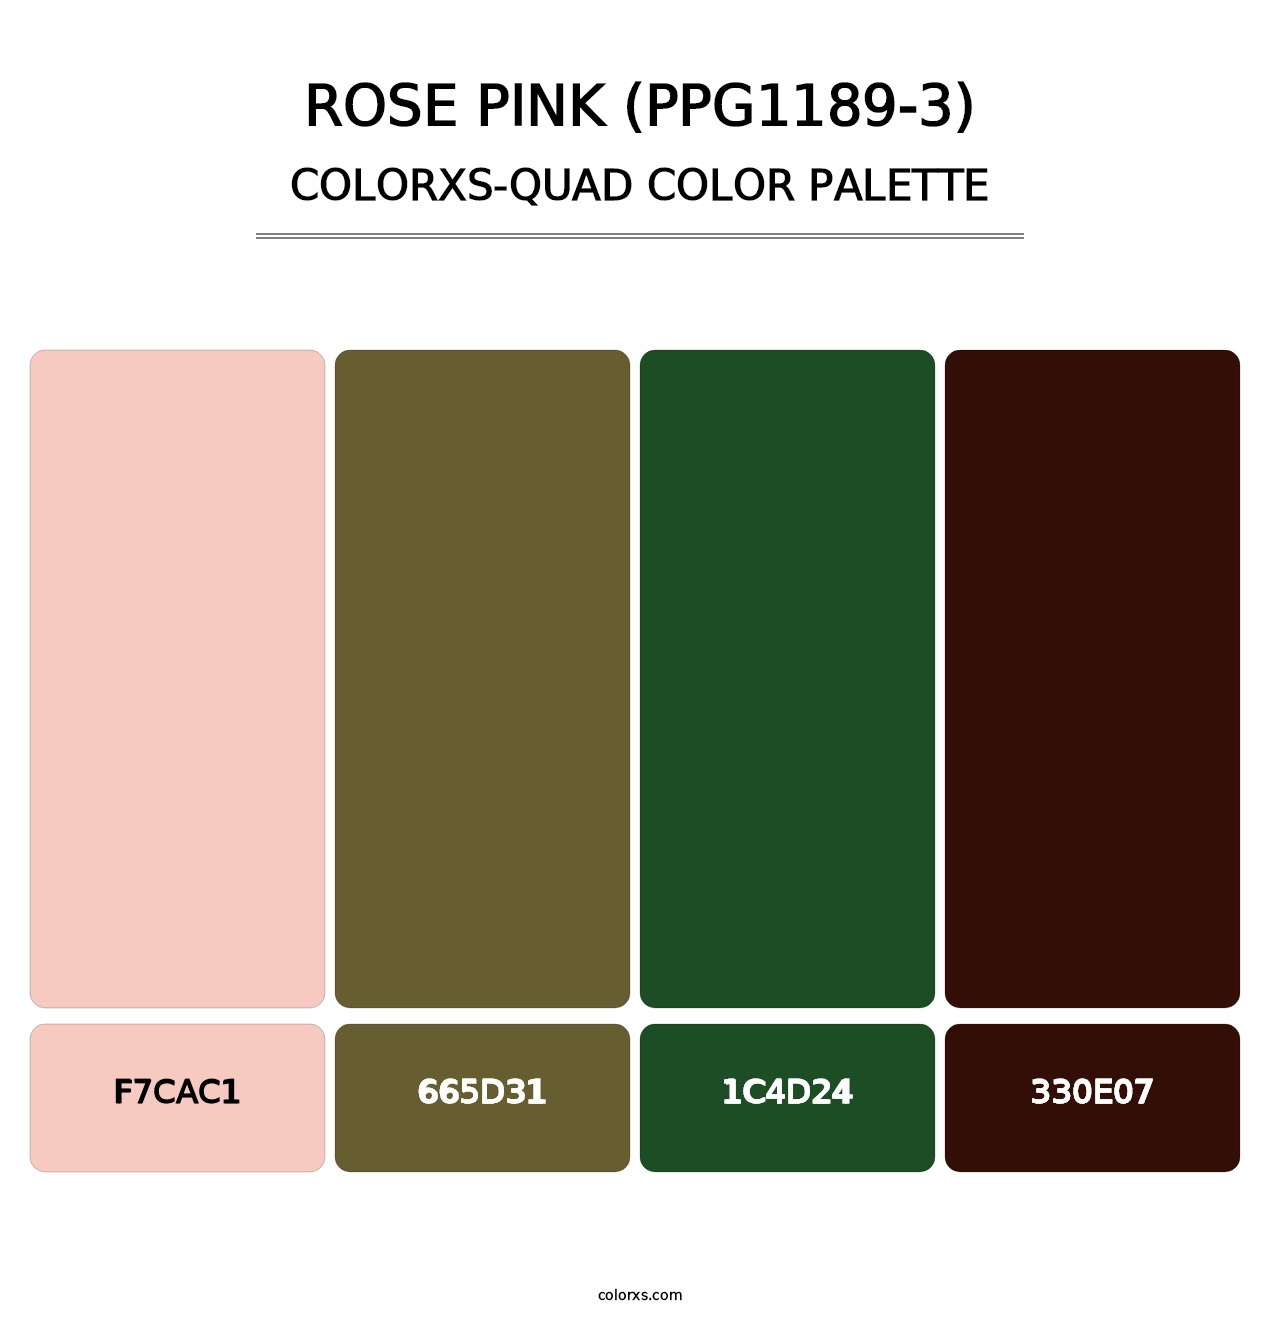 Rose Pink (PPG1189-3) - Colorxs Quad Palette